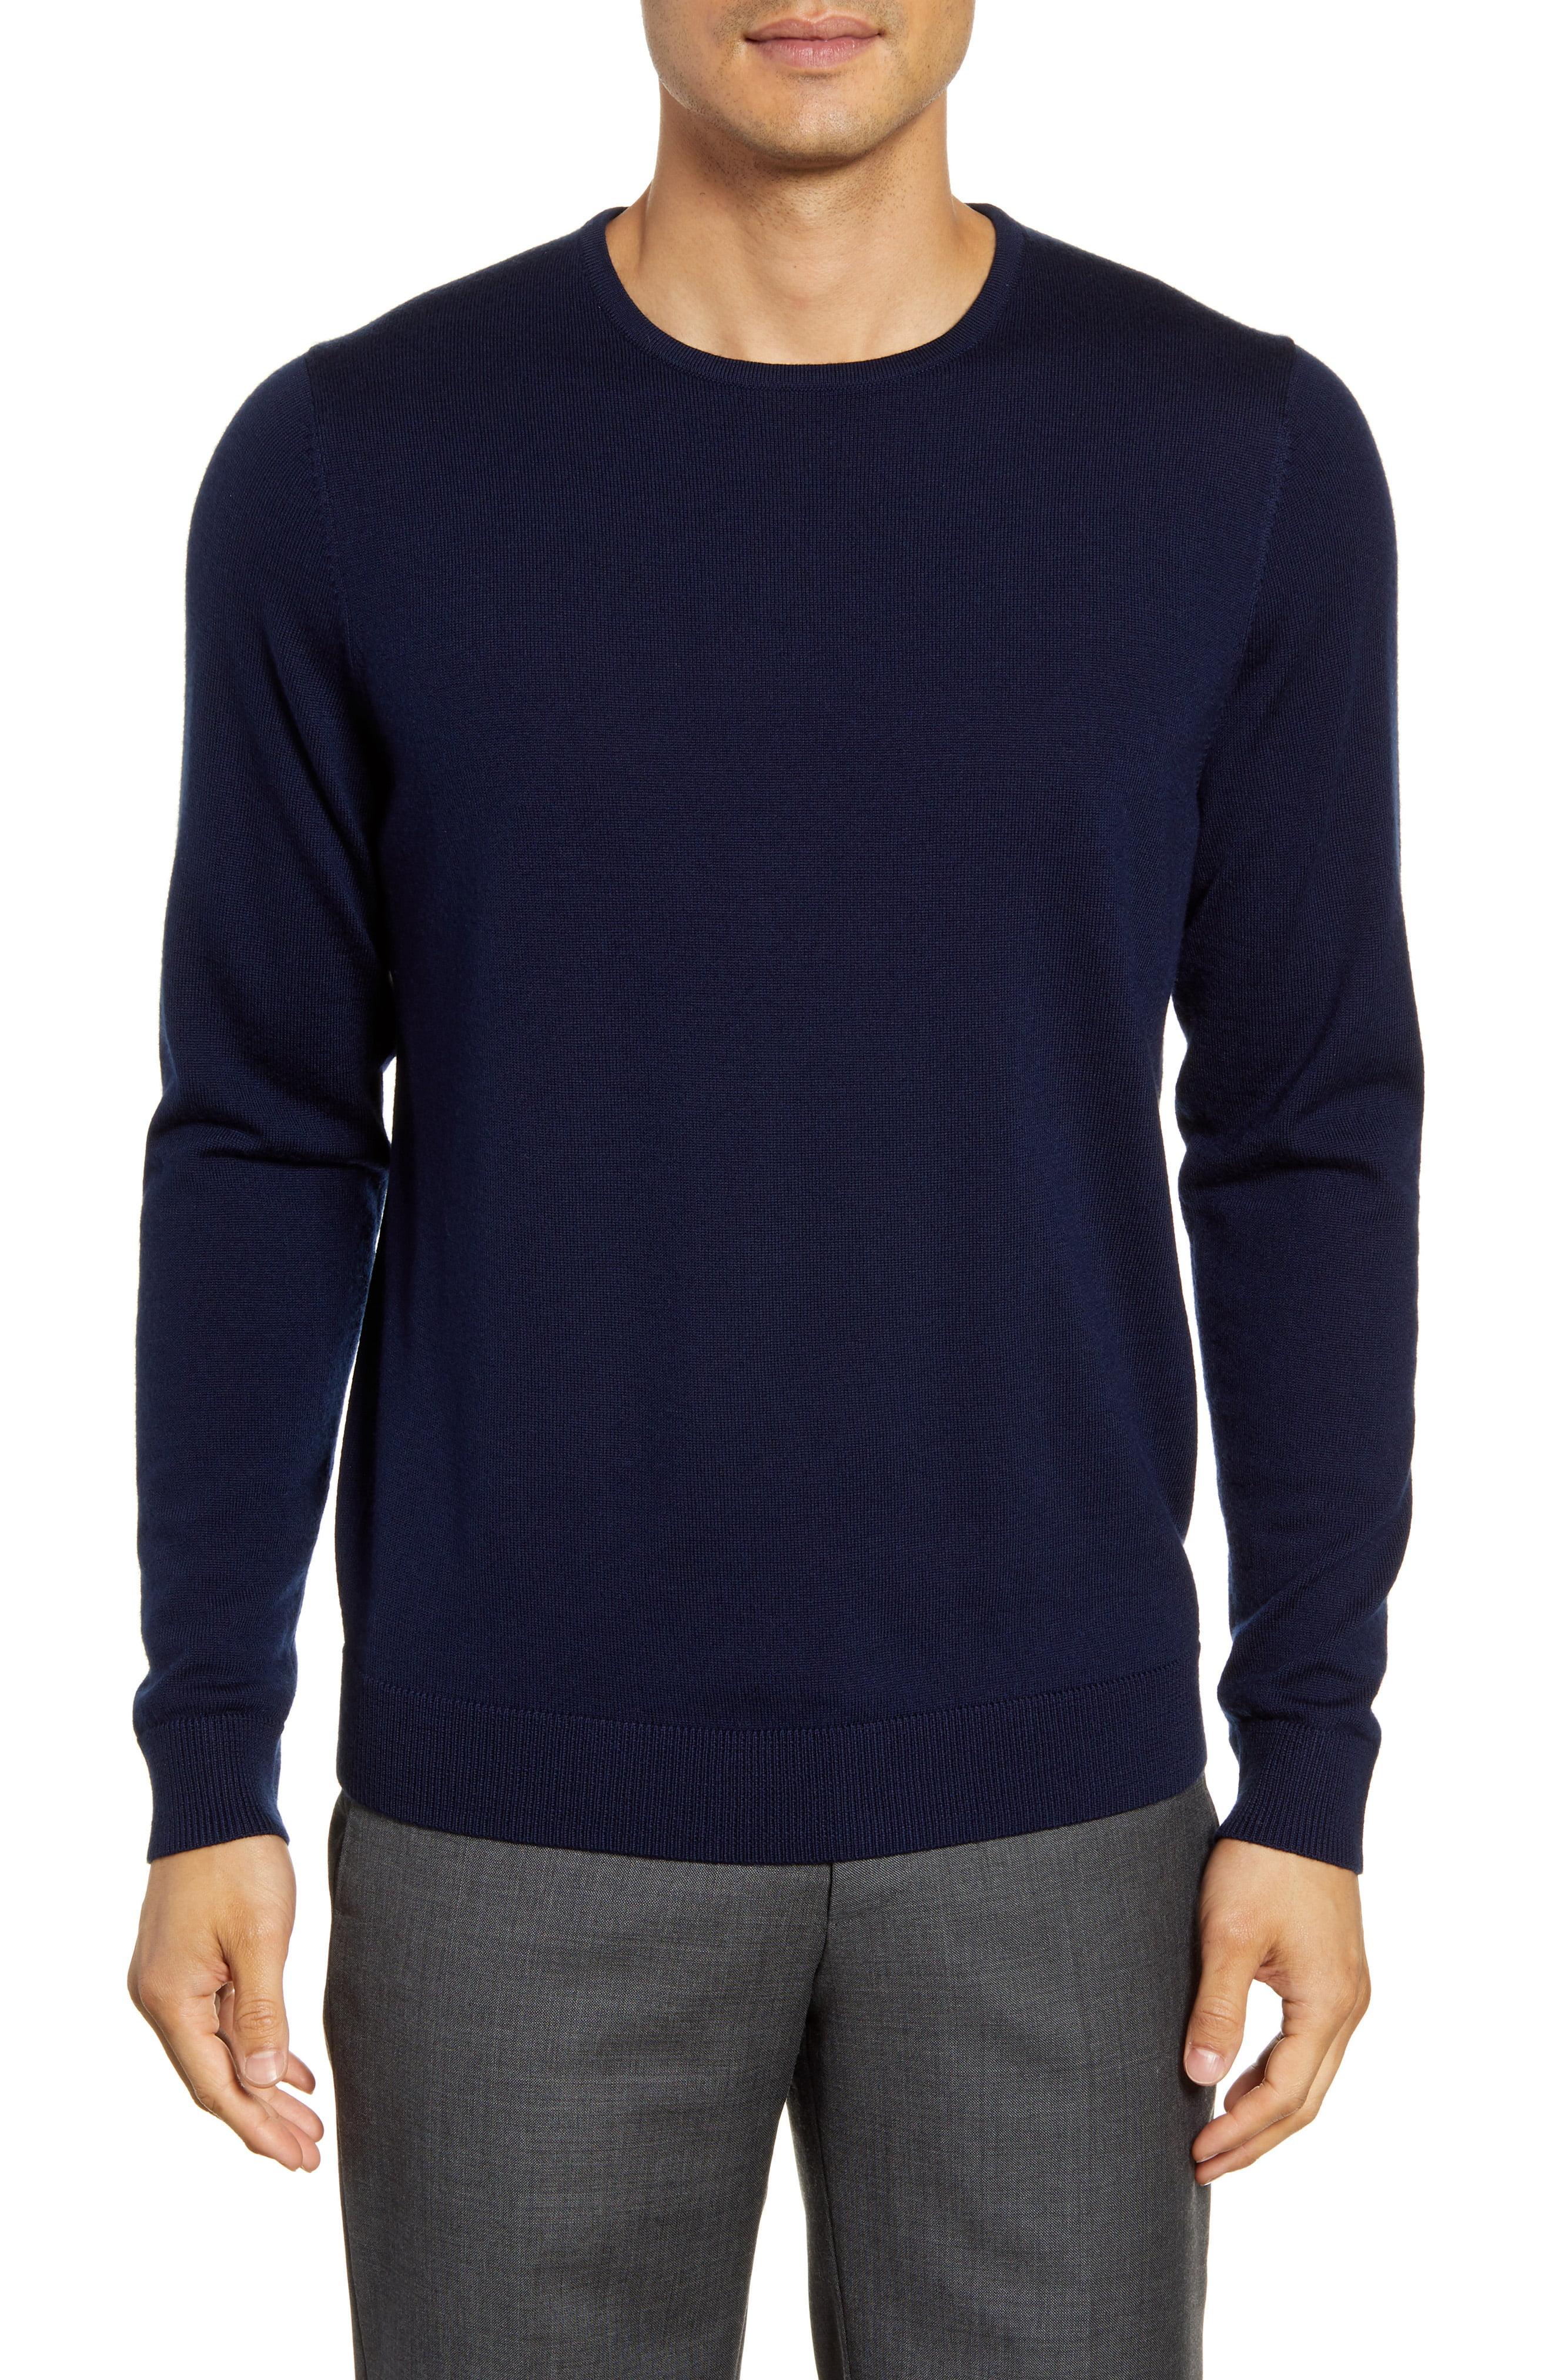 Nordstrom Crewneck Merino Wool Sweater in Blue for Men - Lyst